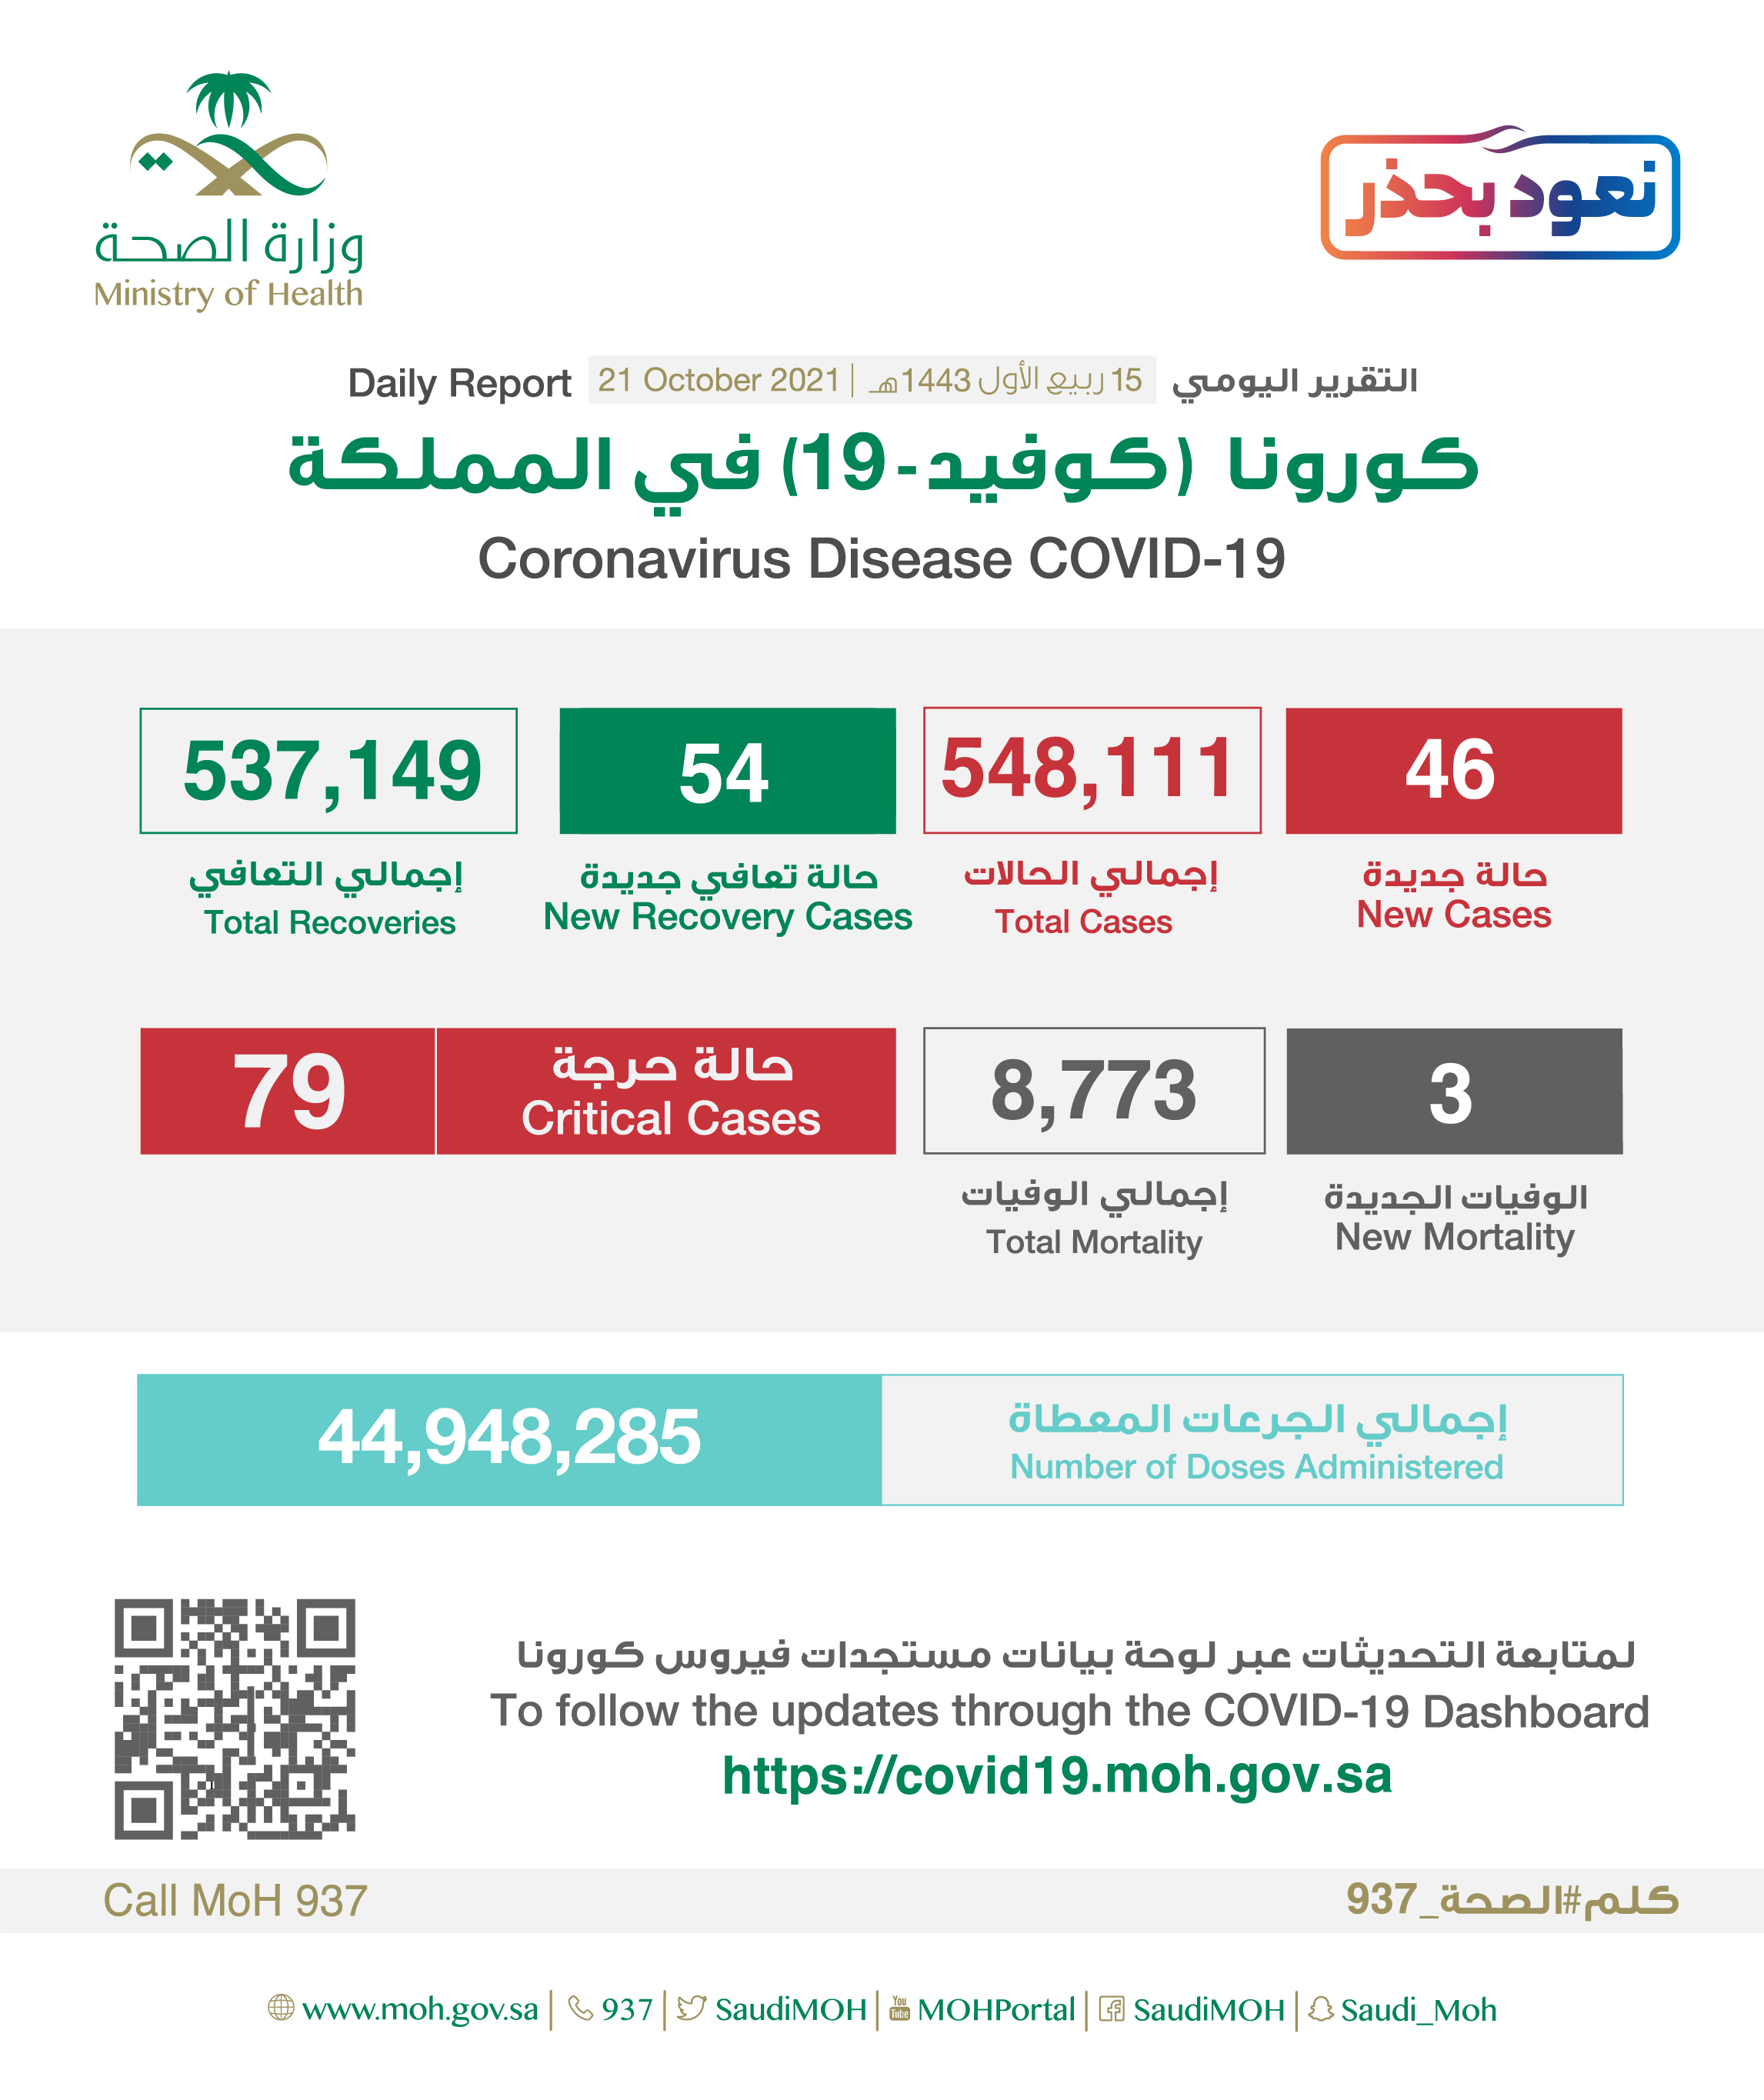 Saudi Arabia Coronavirus : Total Cases : 548,111, New Cases : 46, Cured : 537,149, Deaths: 8,773, Active Cases : 2,189